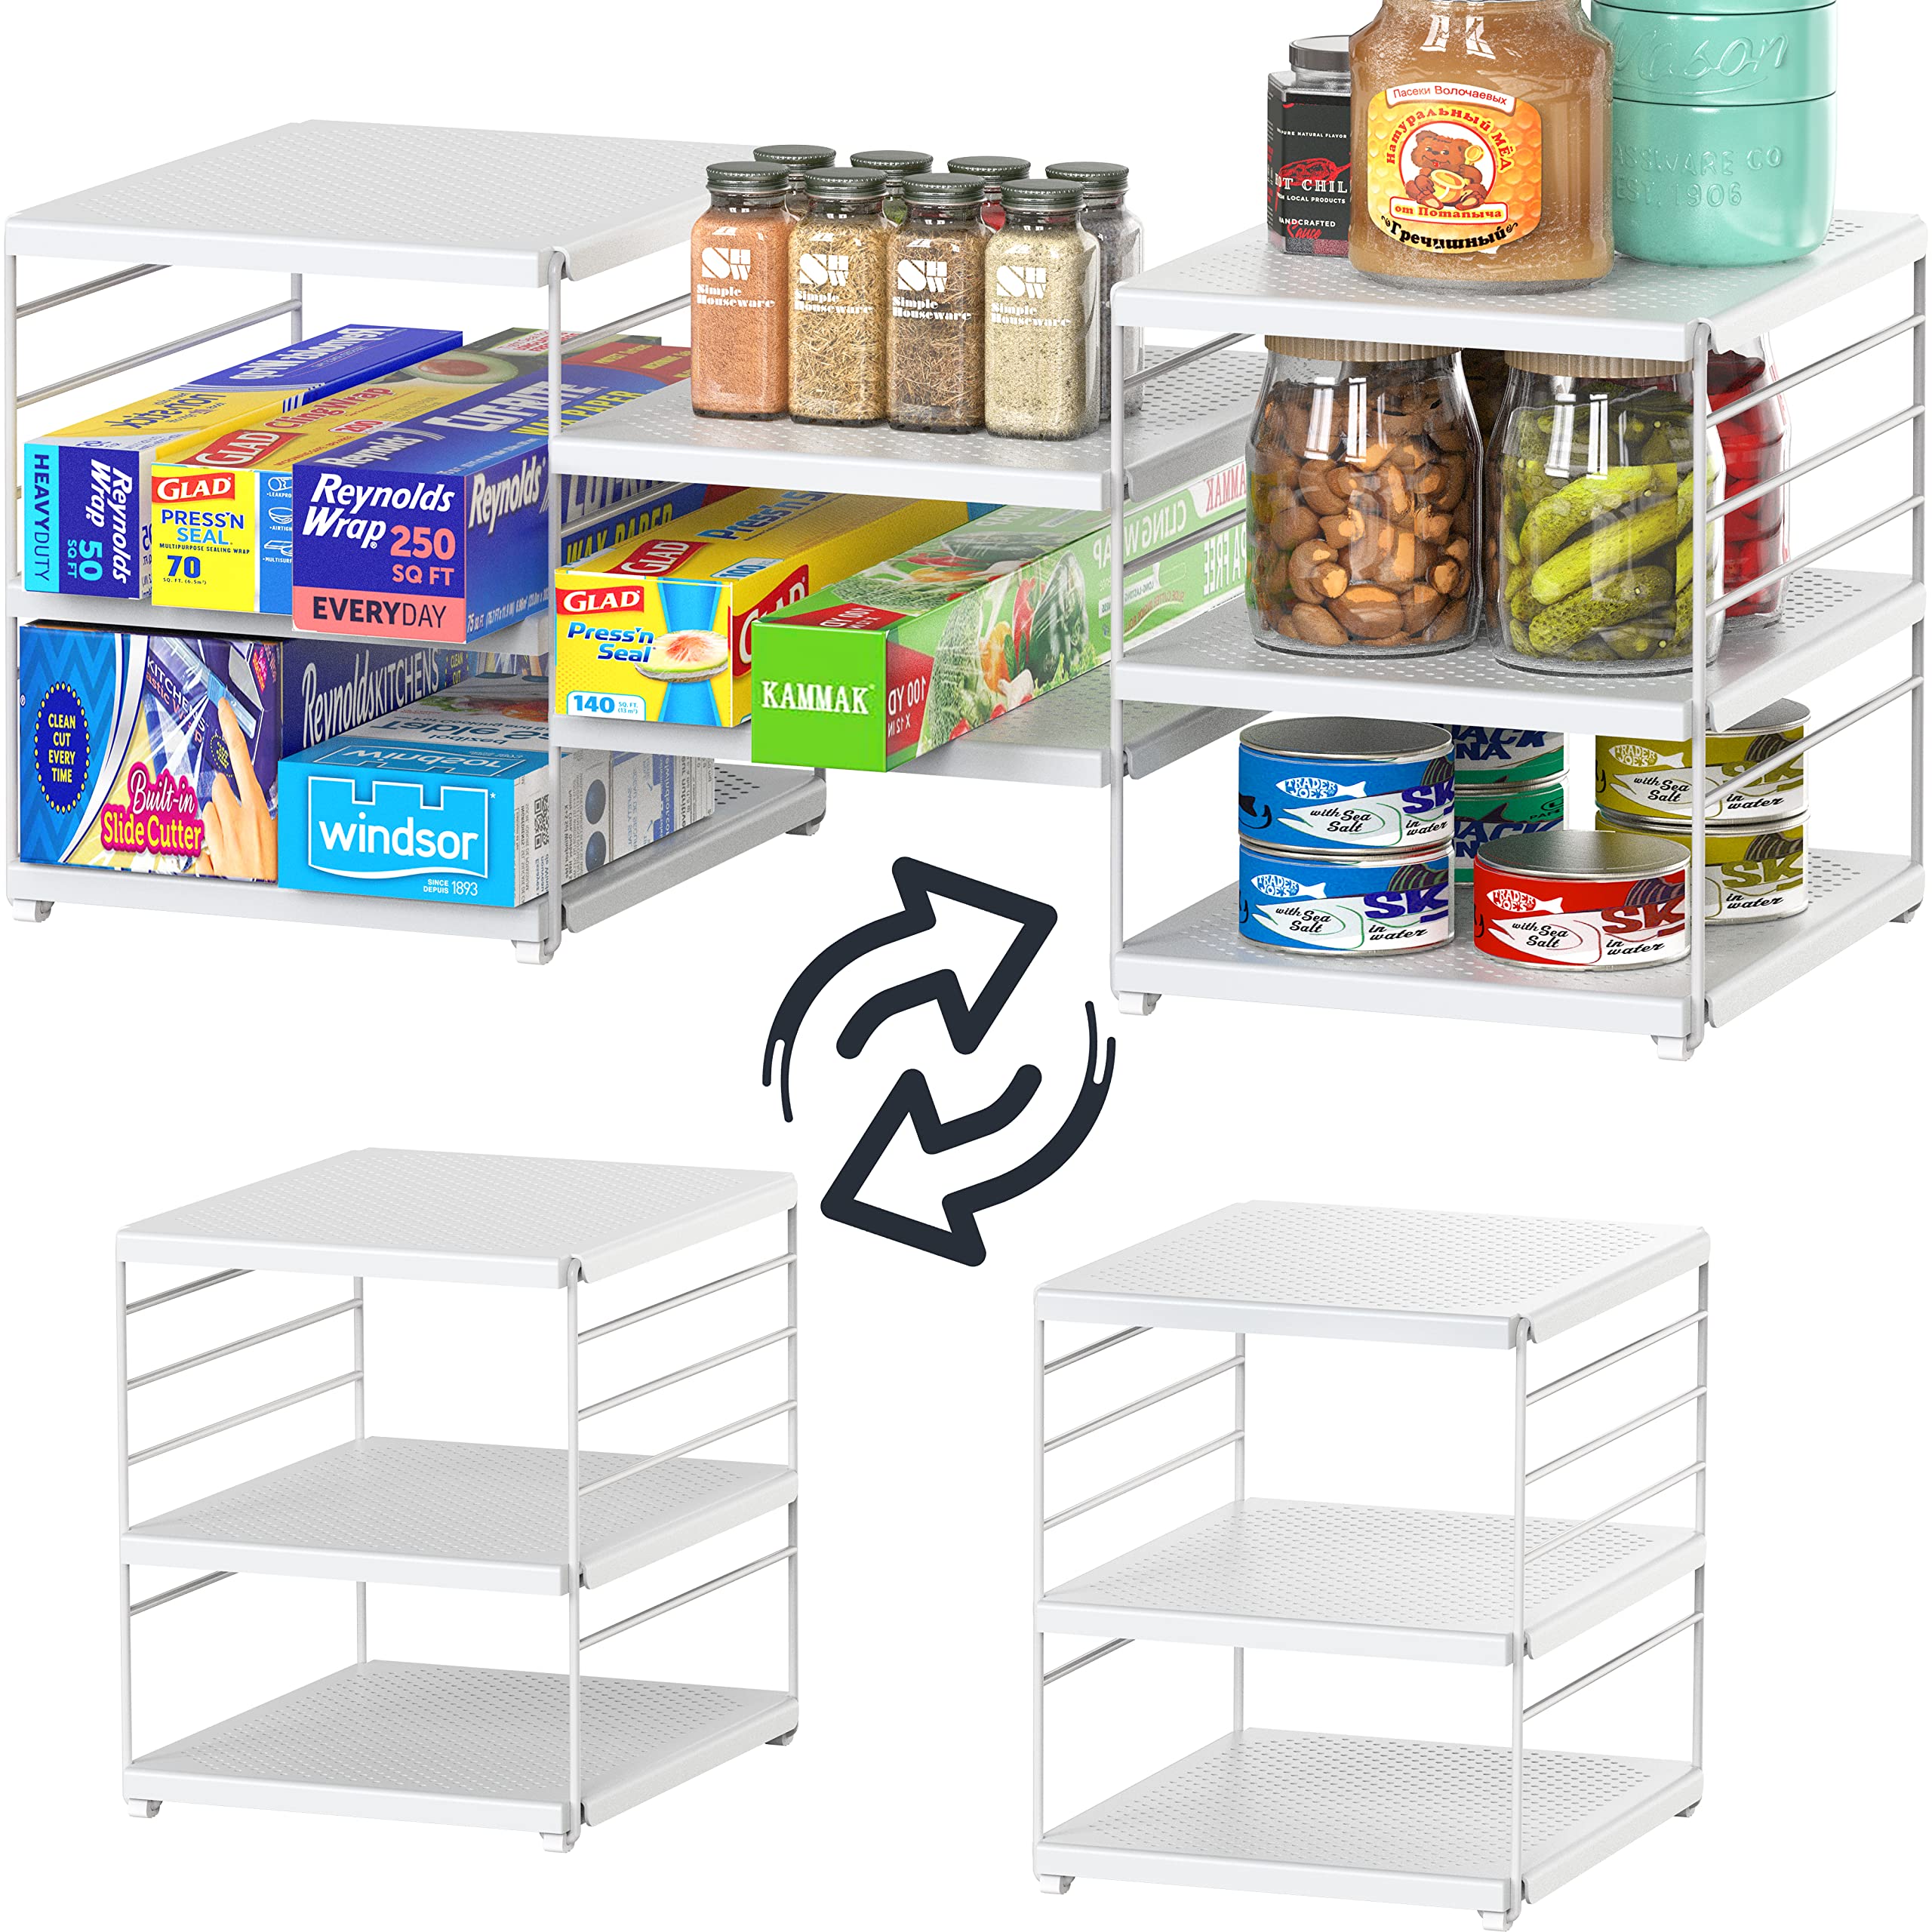 Simple Houseware Expendable Kitchen Counter Shelf Organizer, White, Plastic, 23.2" L x 9.8" W x 8.7" H